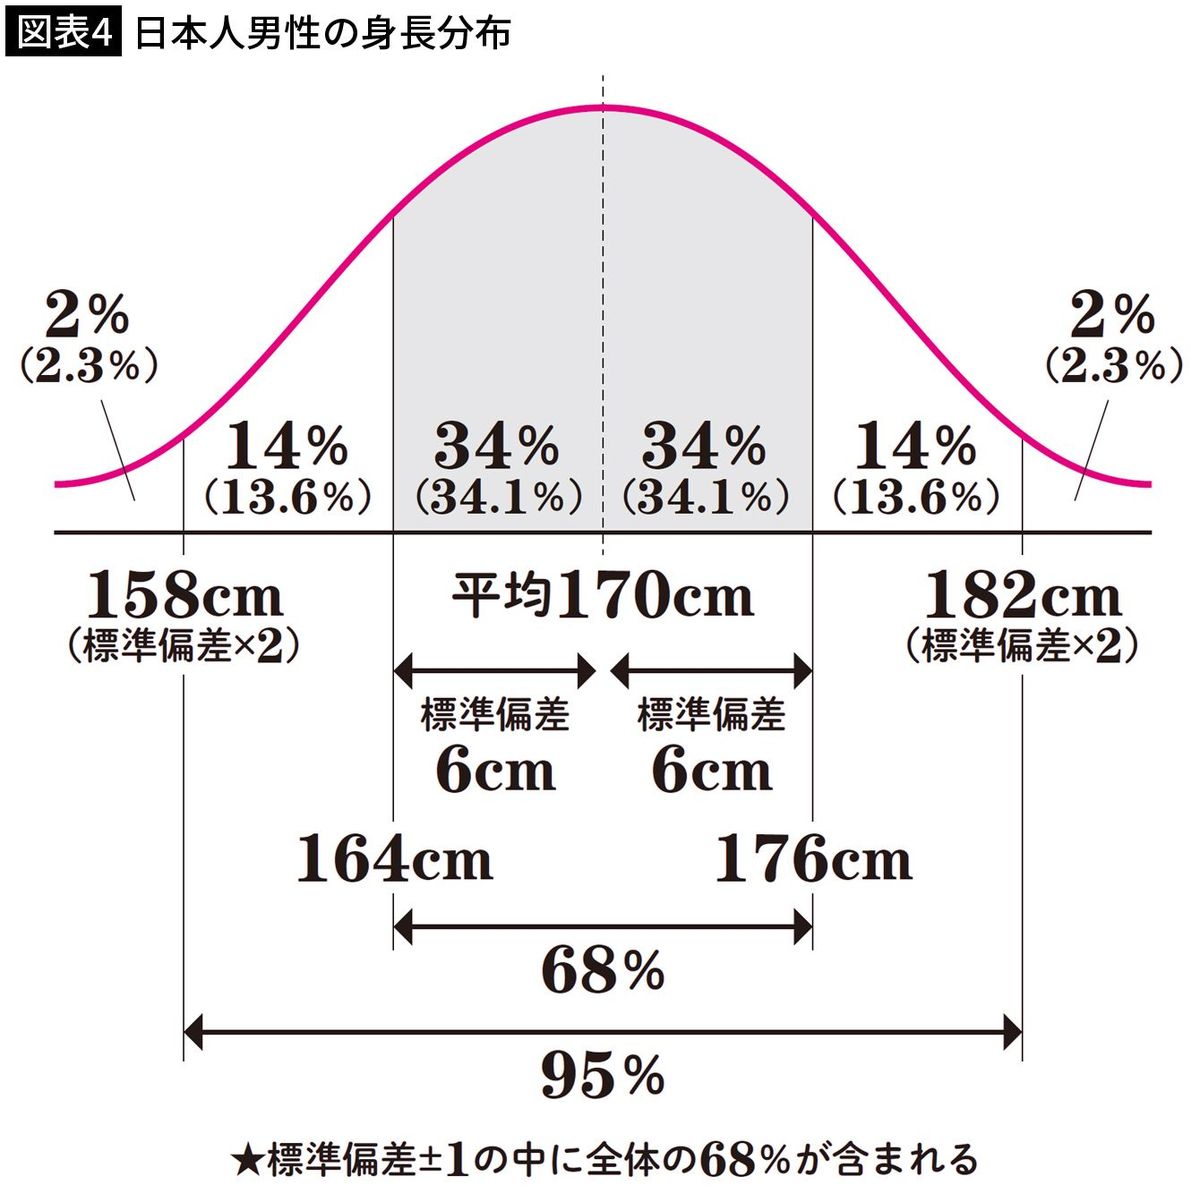 【図表4】日本人男性の身長分布